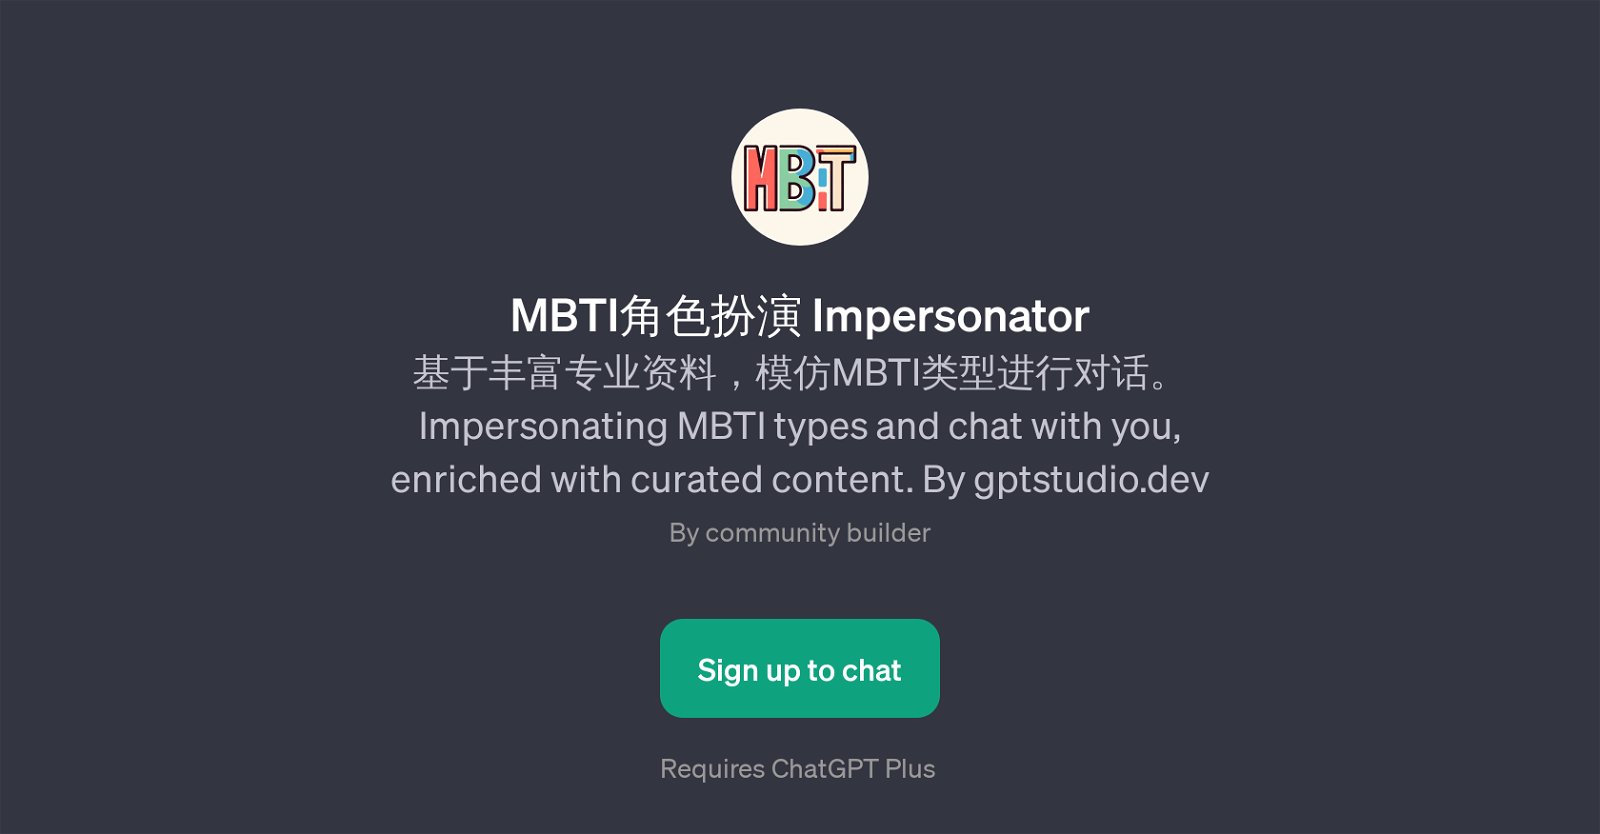 MBTI Impersonator website